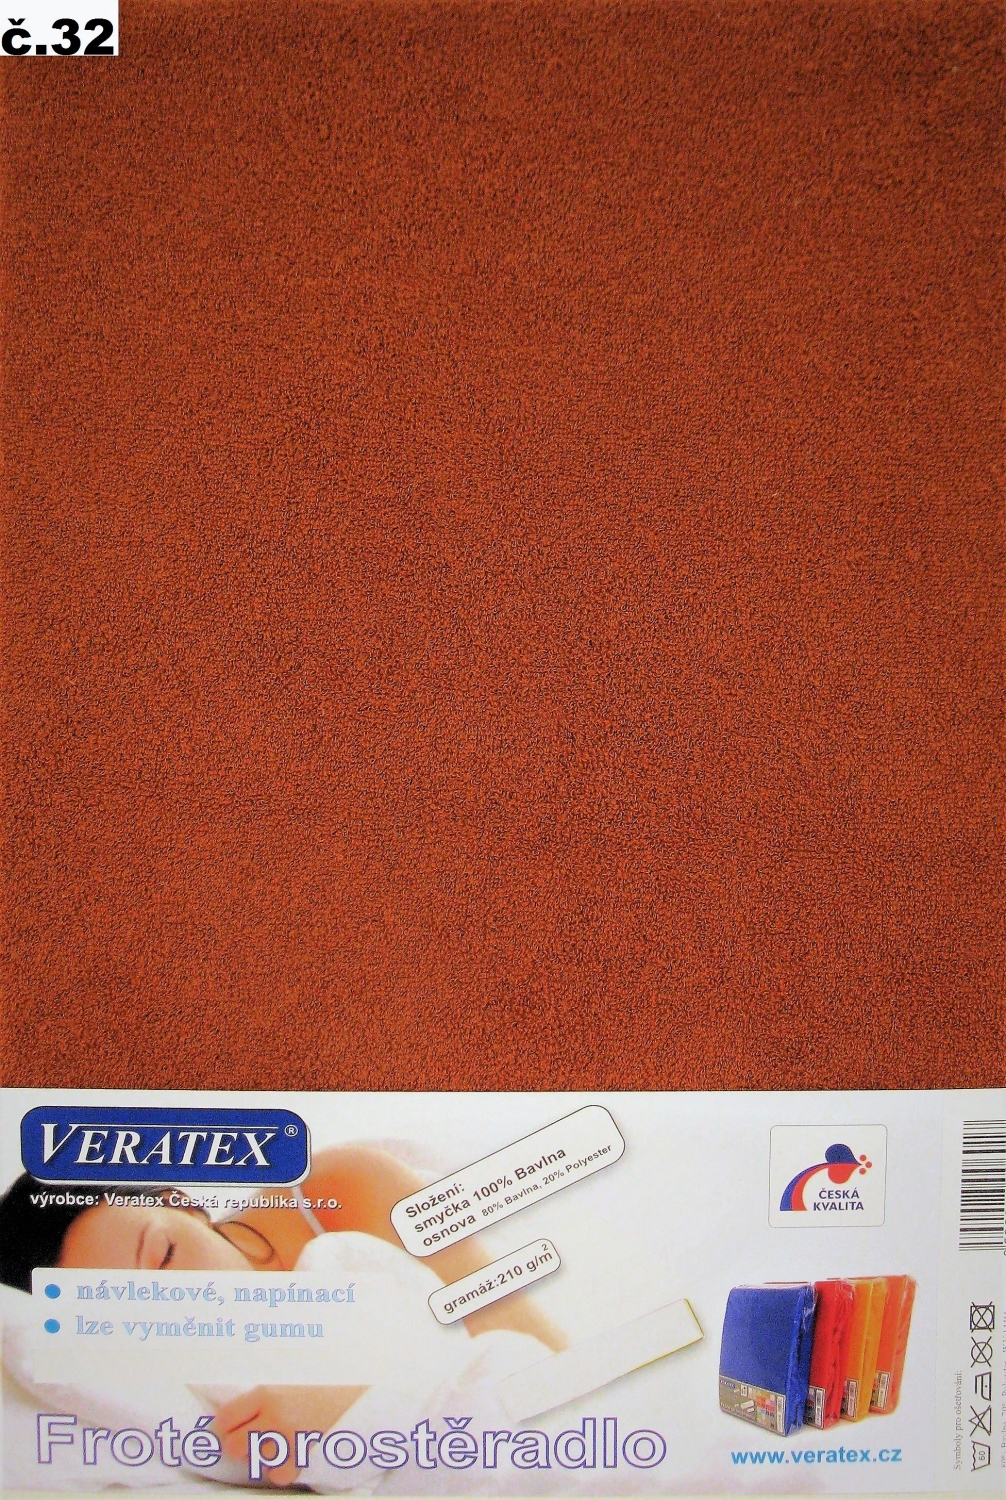 Veratex Froté prostěradlo 160x220/16 cm (č.32 skořicová) 160 x 220 cm